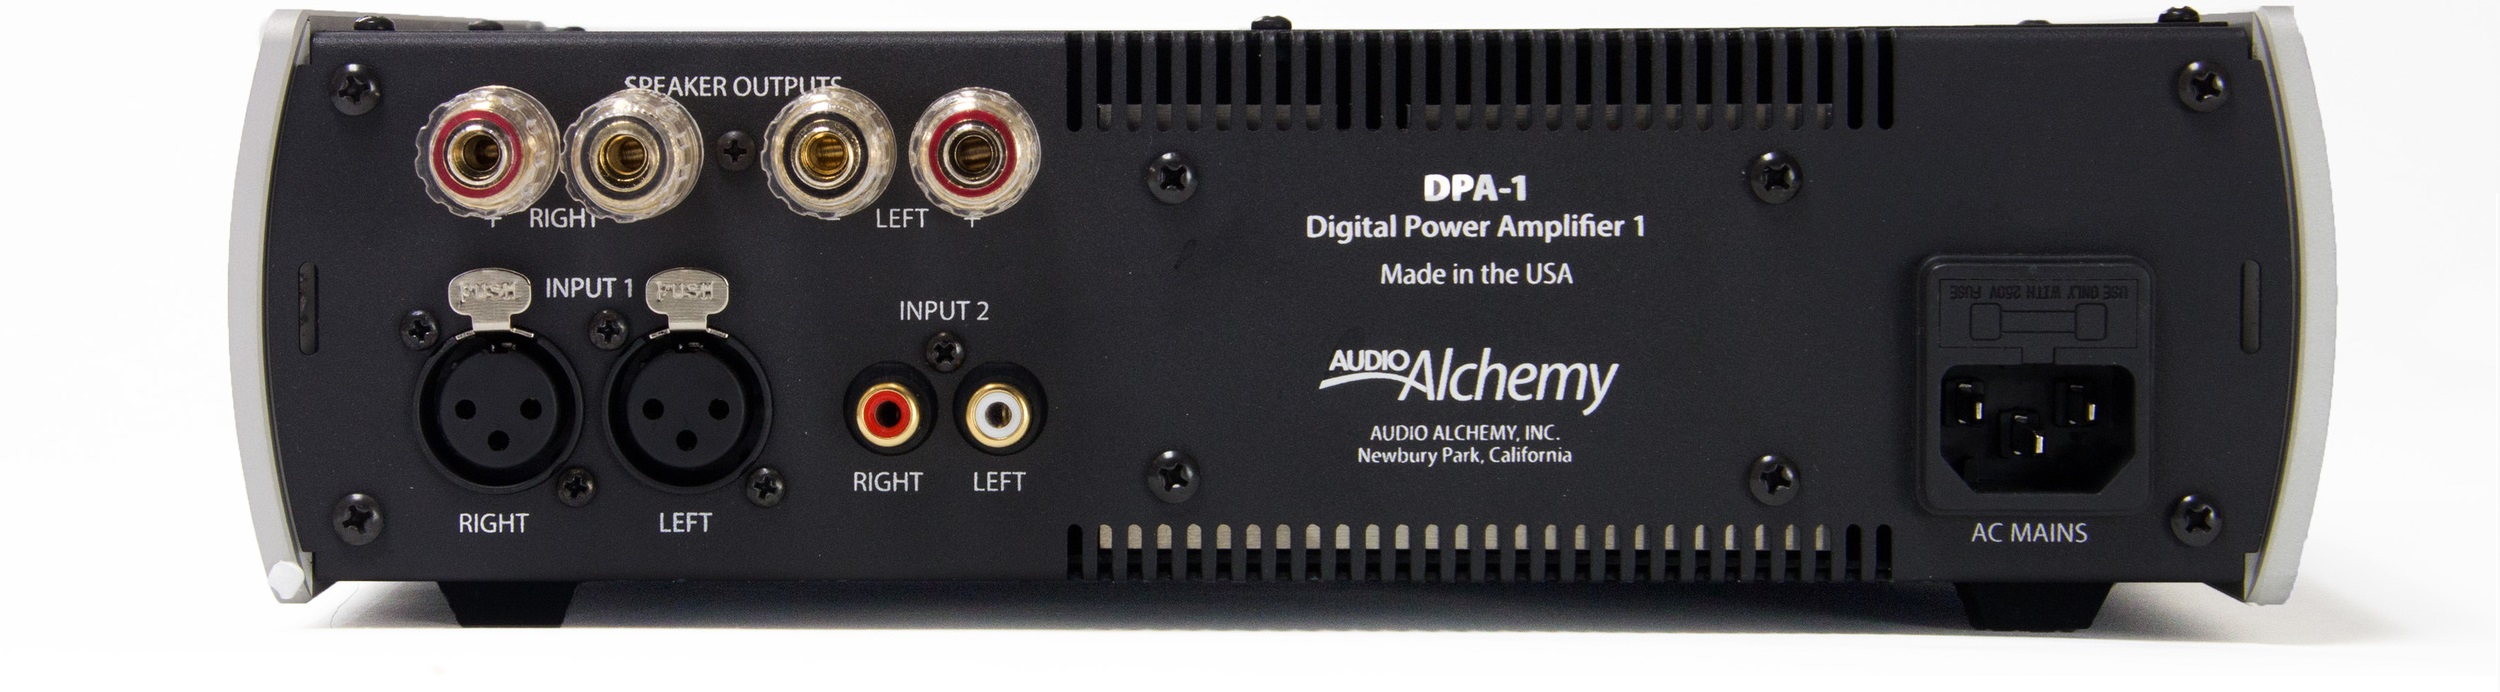 Colab Audio Alchemy DPA-1